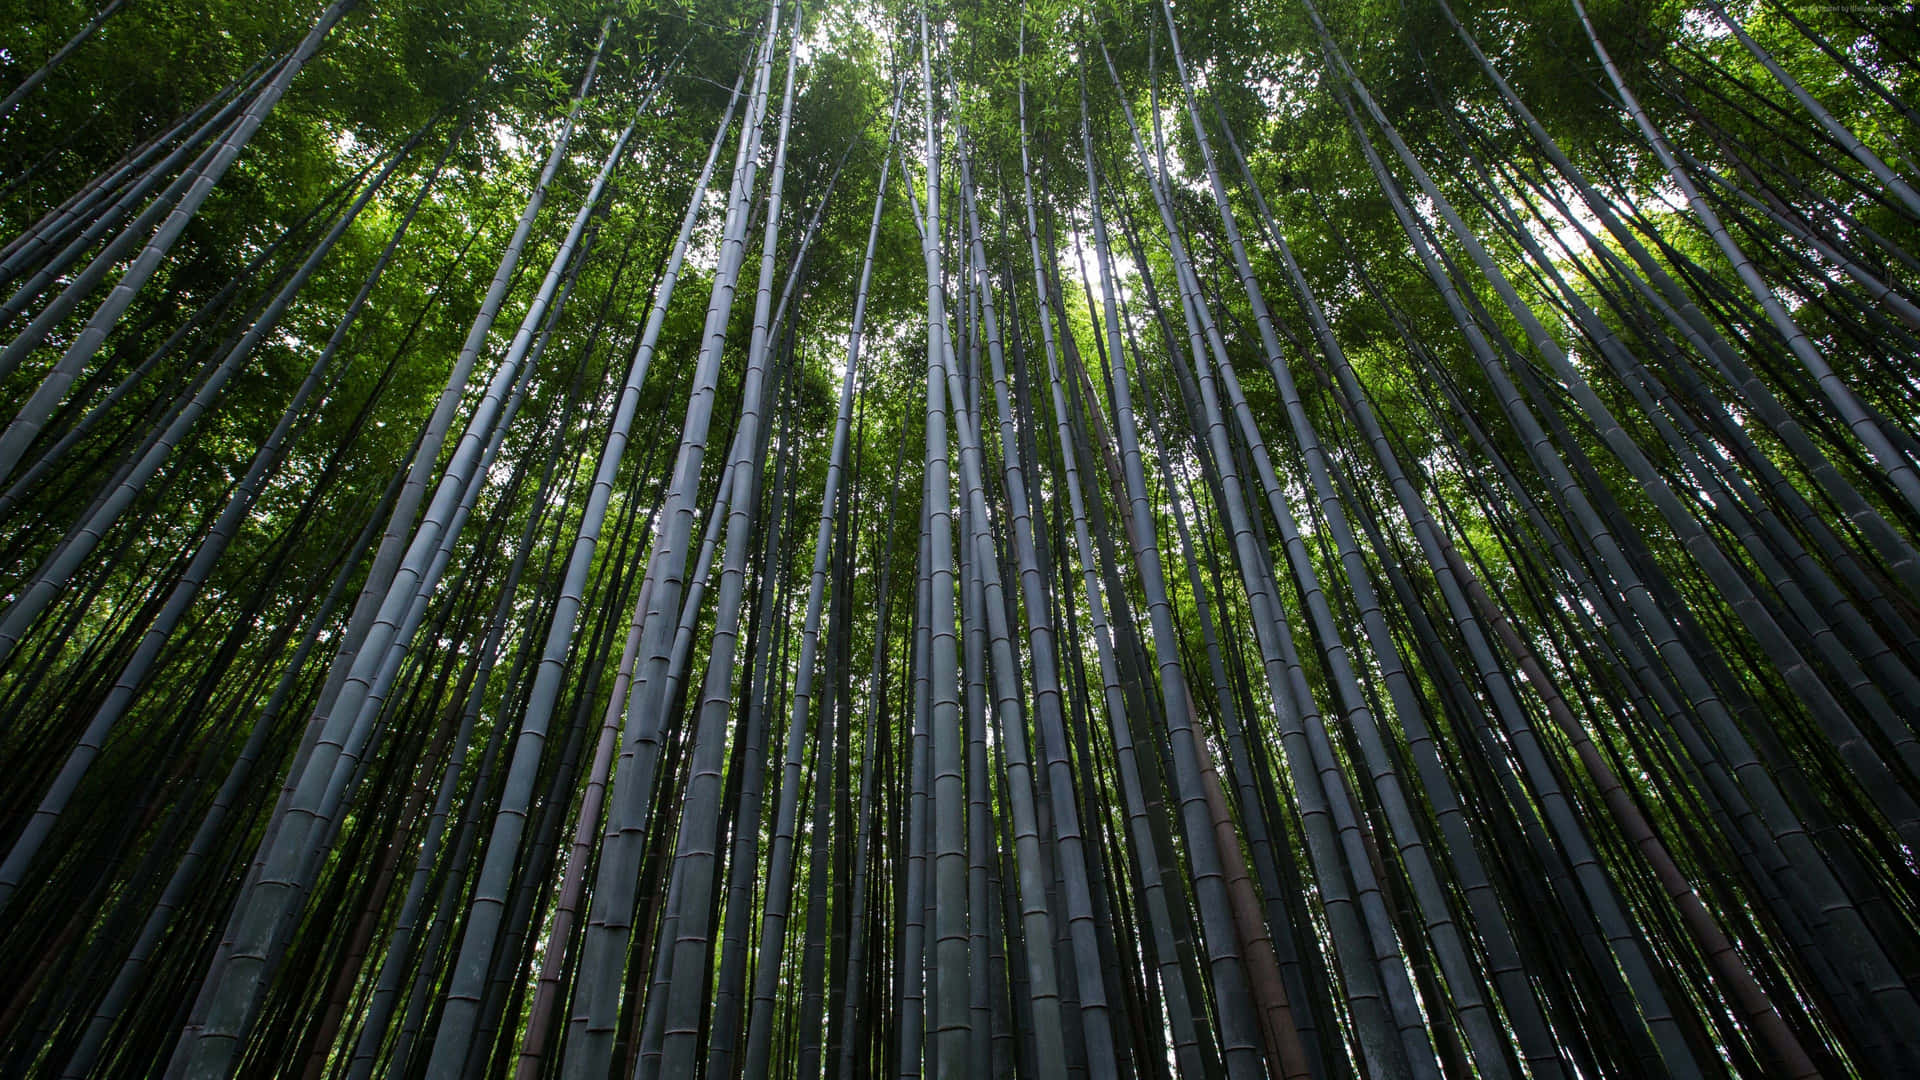 Caption: Serene Green Bamboo Forest Wallpaper